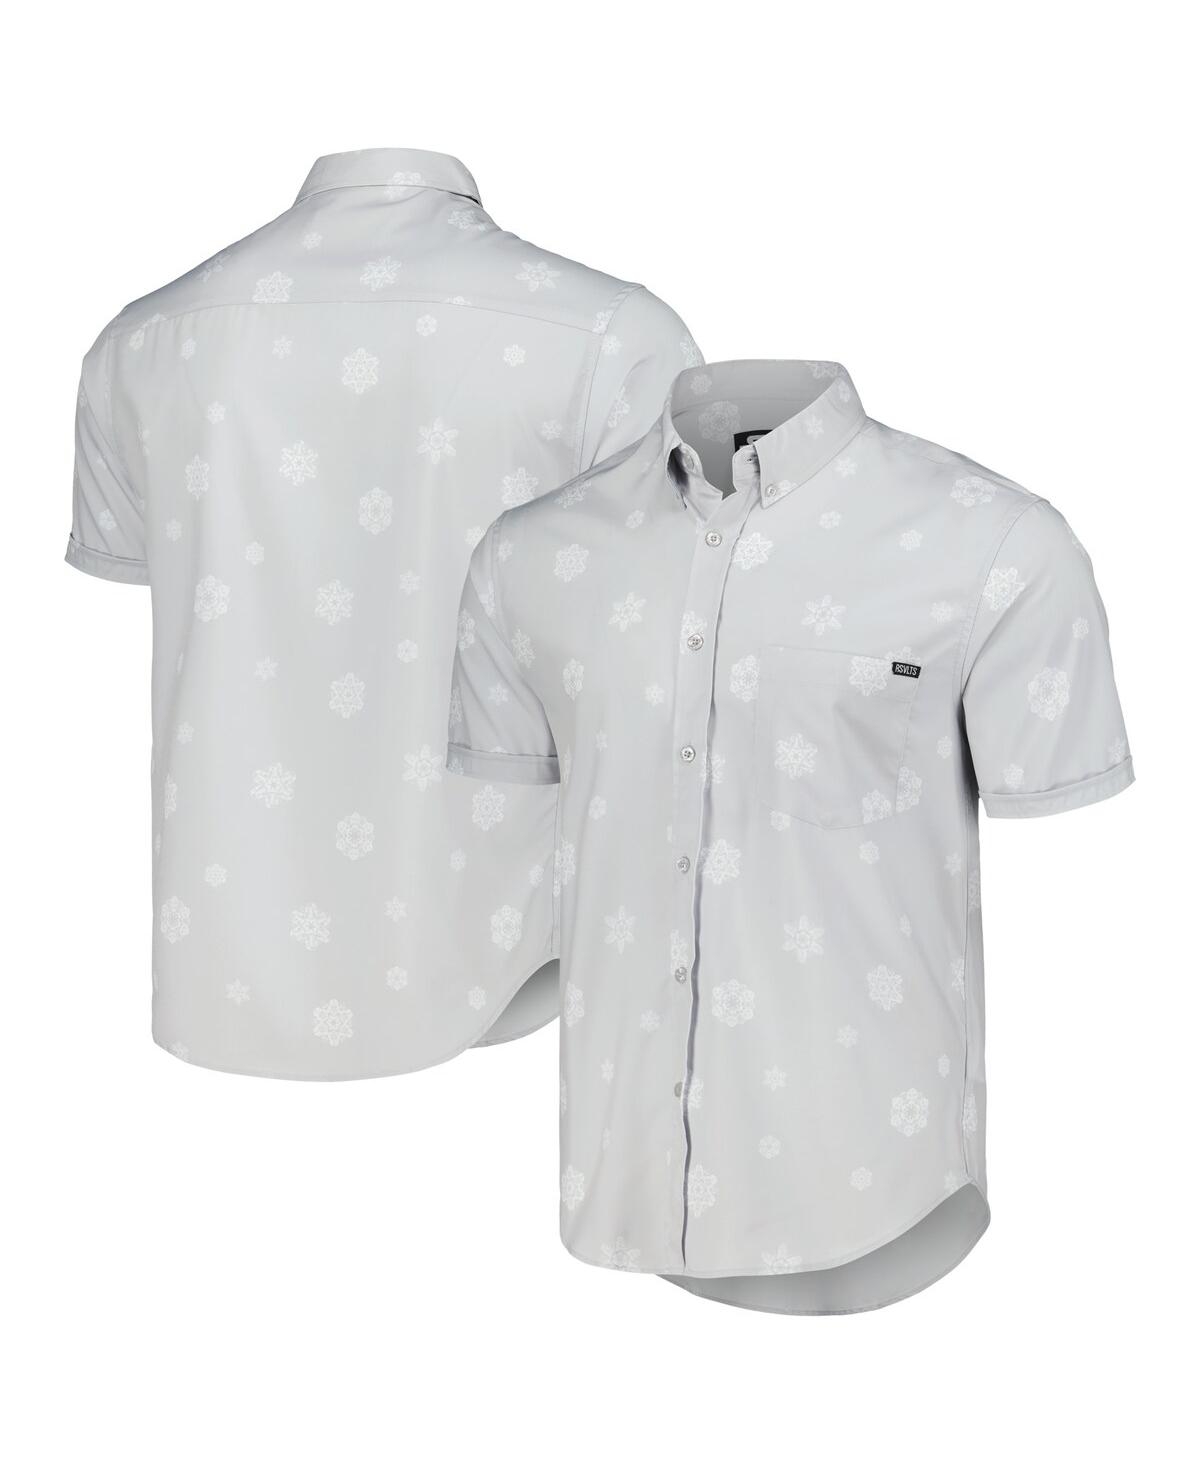 Men's and Women's Rsvlts Gray Star Wars Happy Hothidays KunuflexÂ Button-Down Shirt - Gray